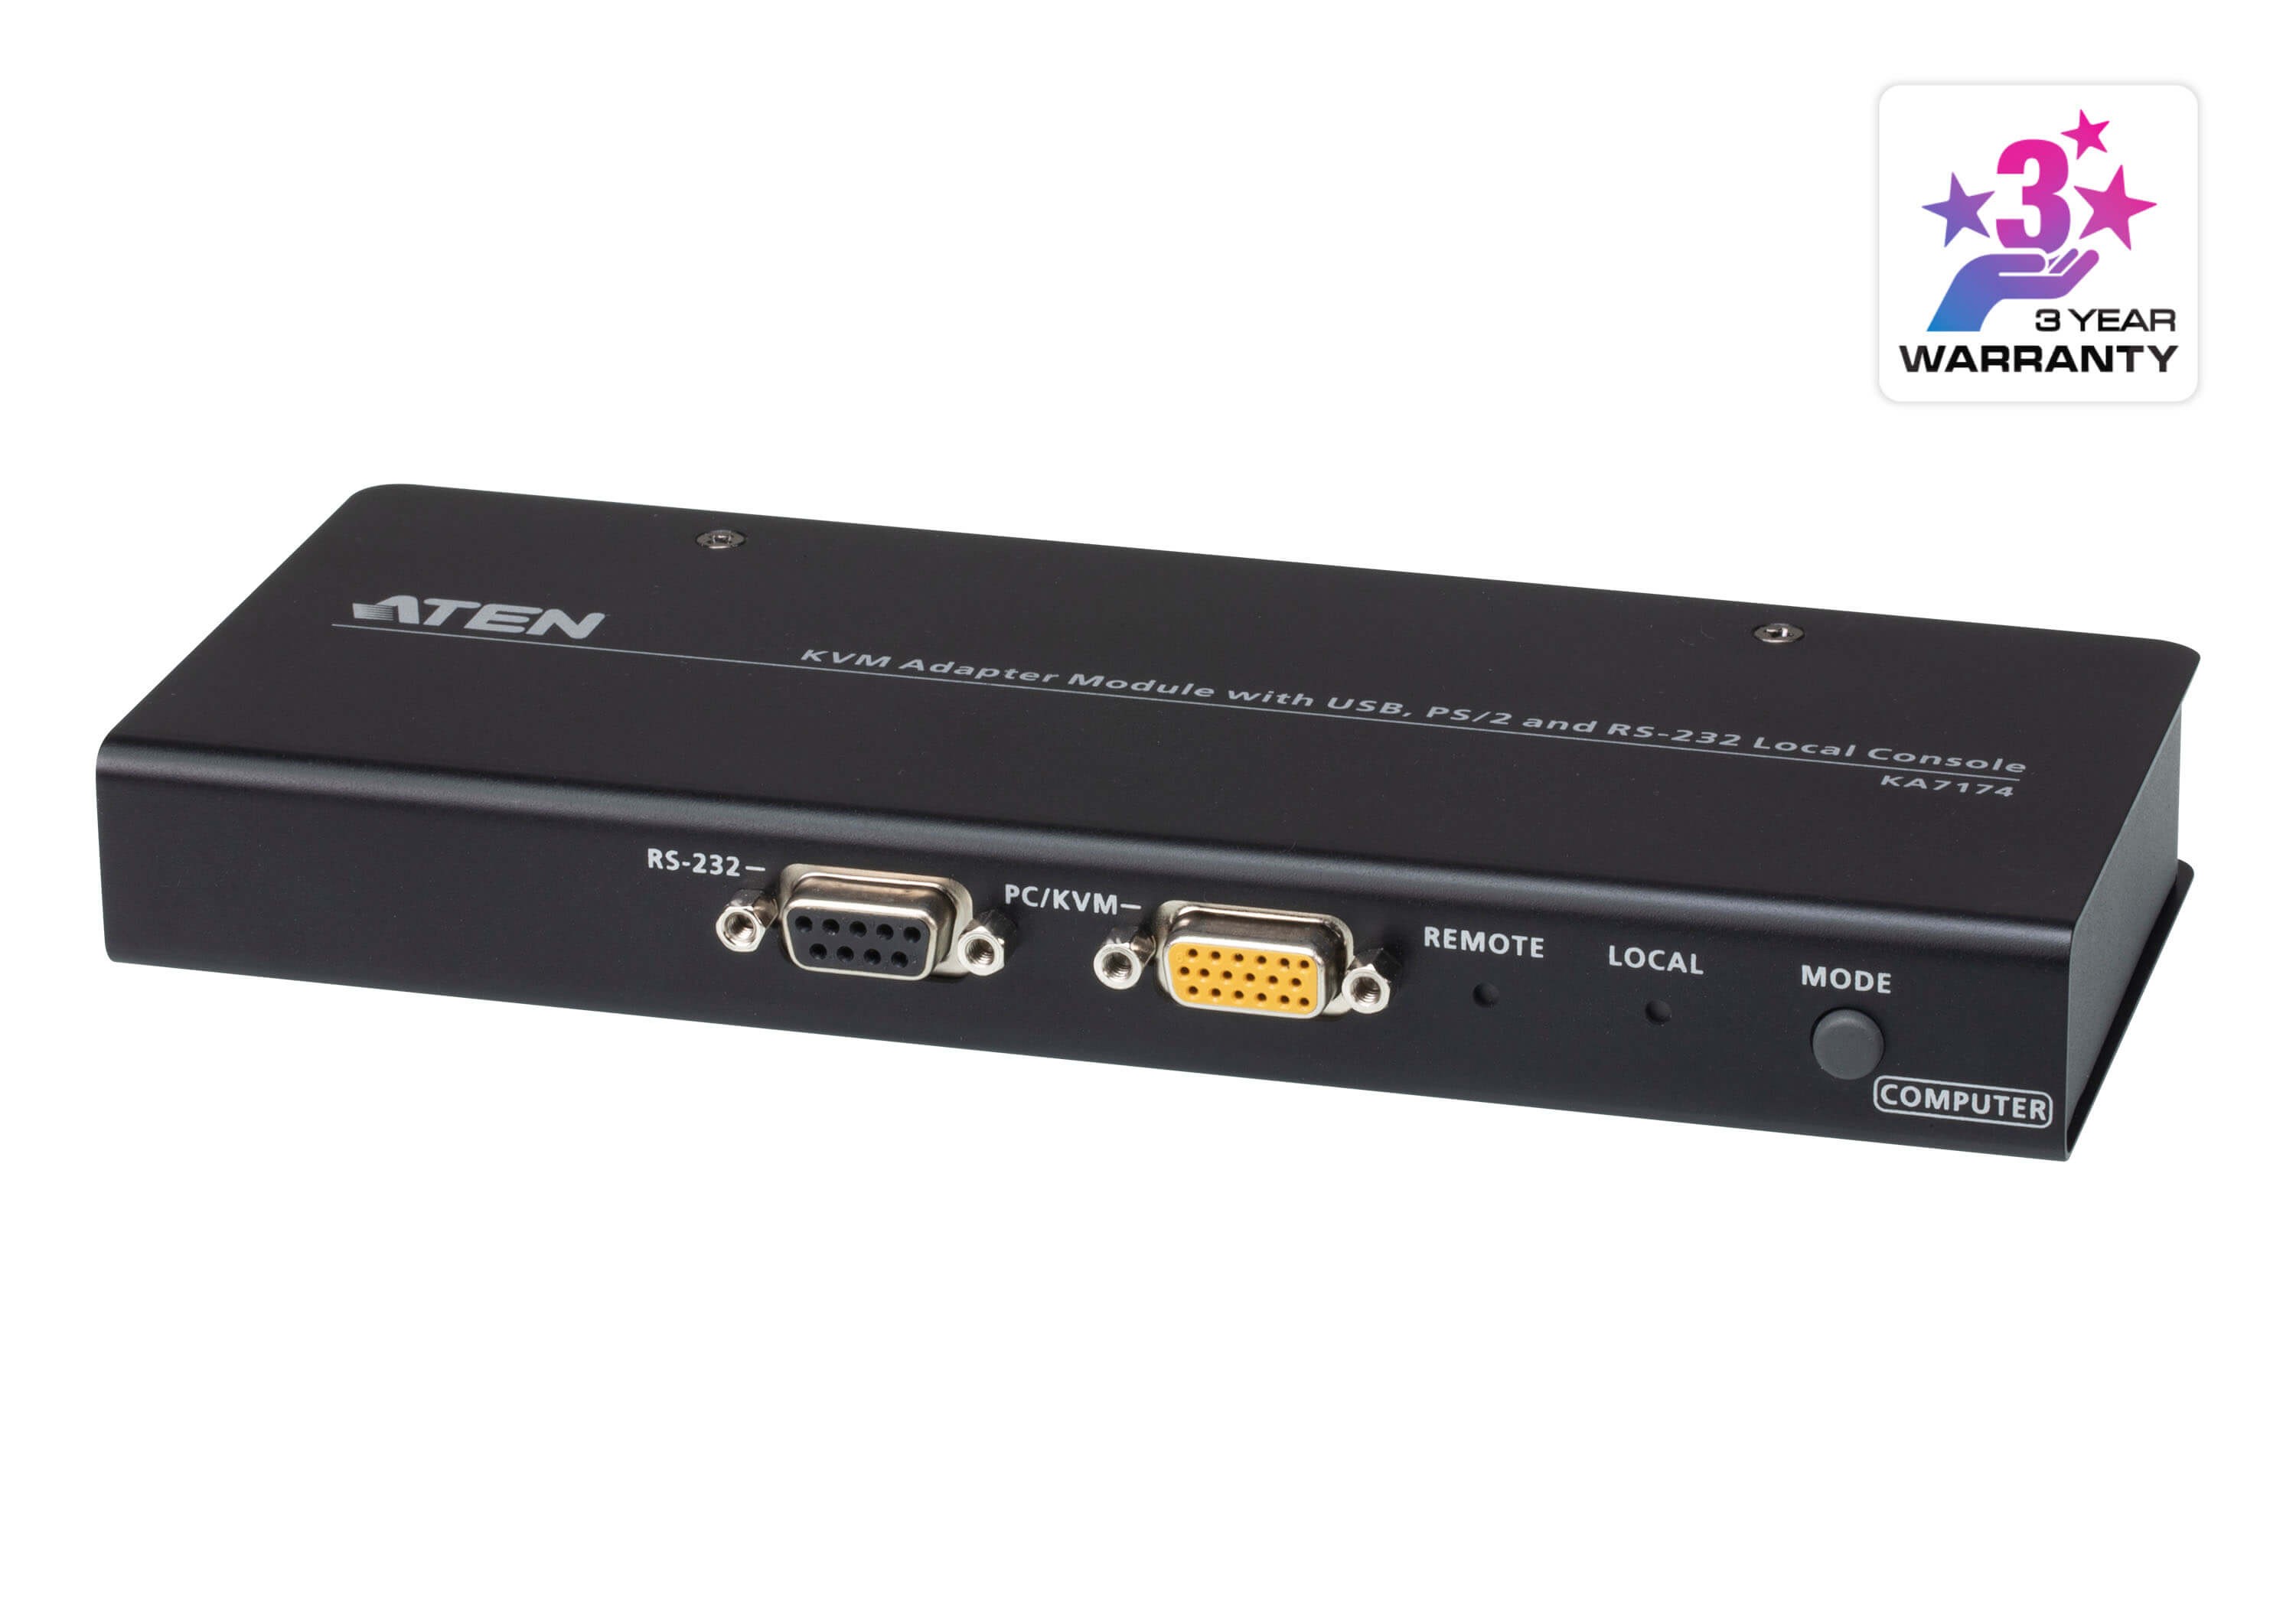 KA7174-AX-G  Módulo adaptador KVM con USB, PS/2 y consola local RS-232